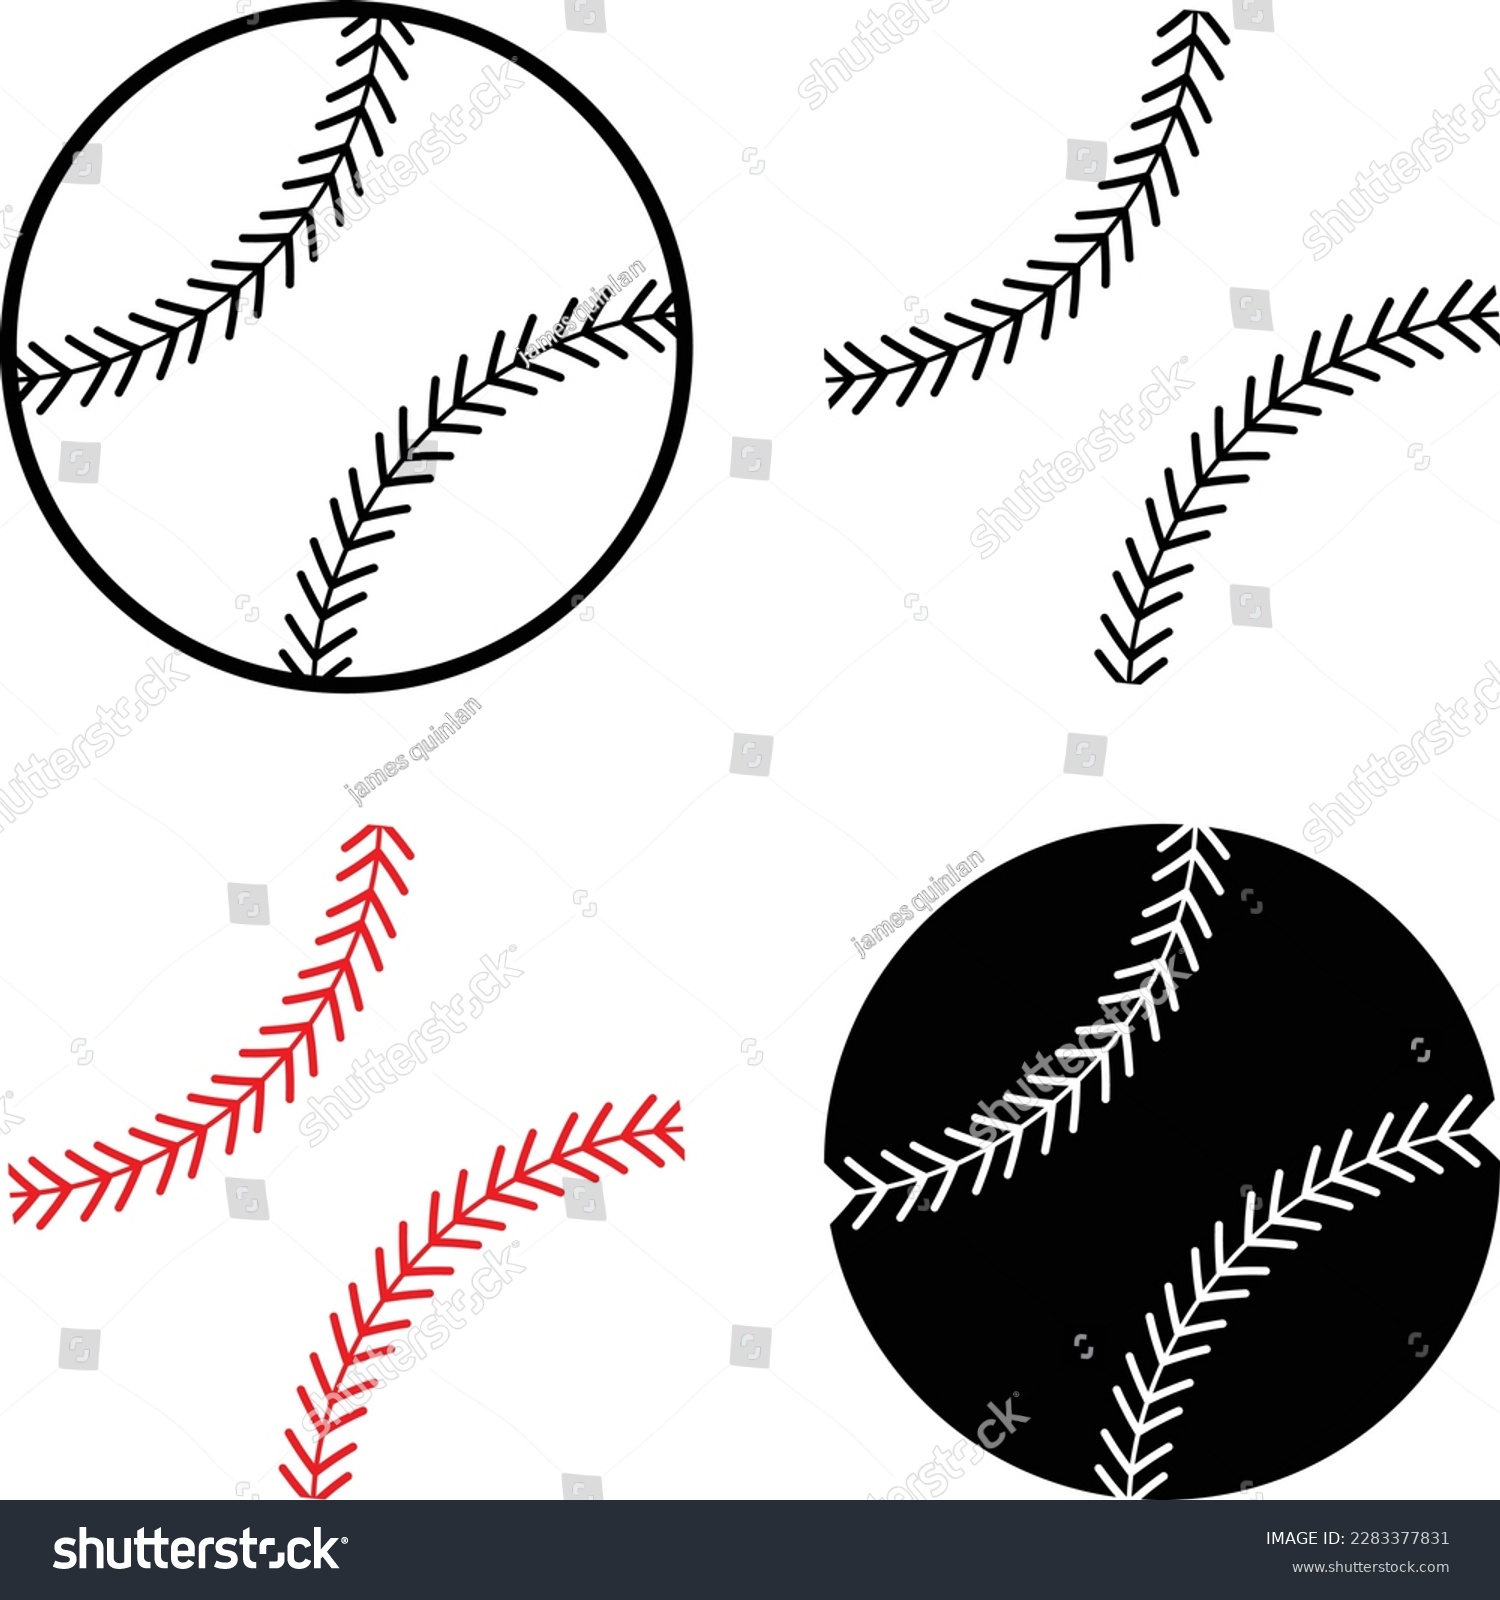 SVG of Baseball svg vector illustration in four styles. svg